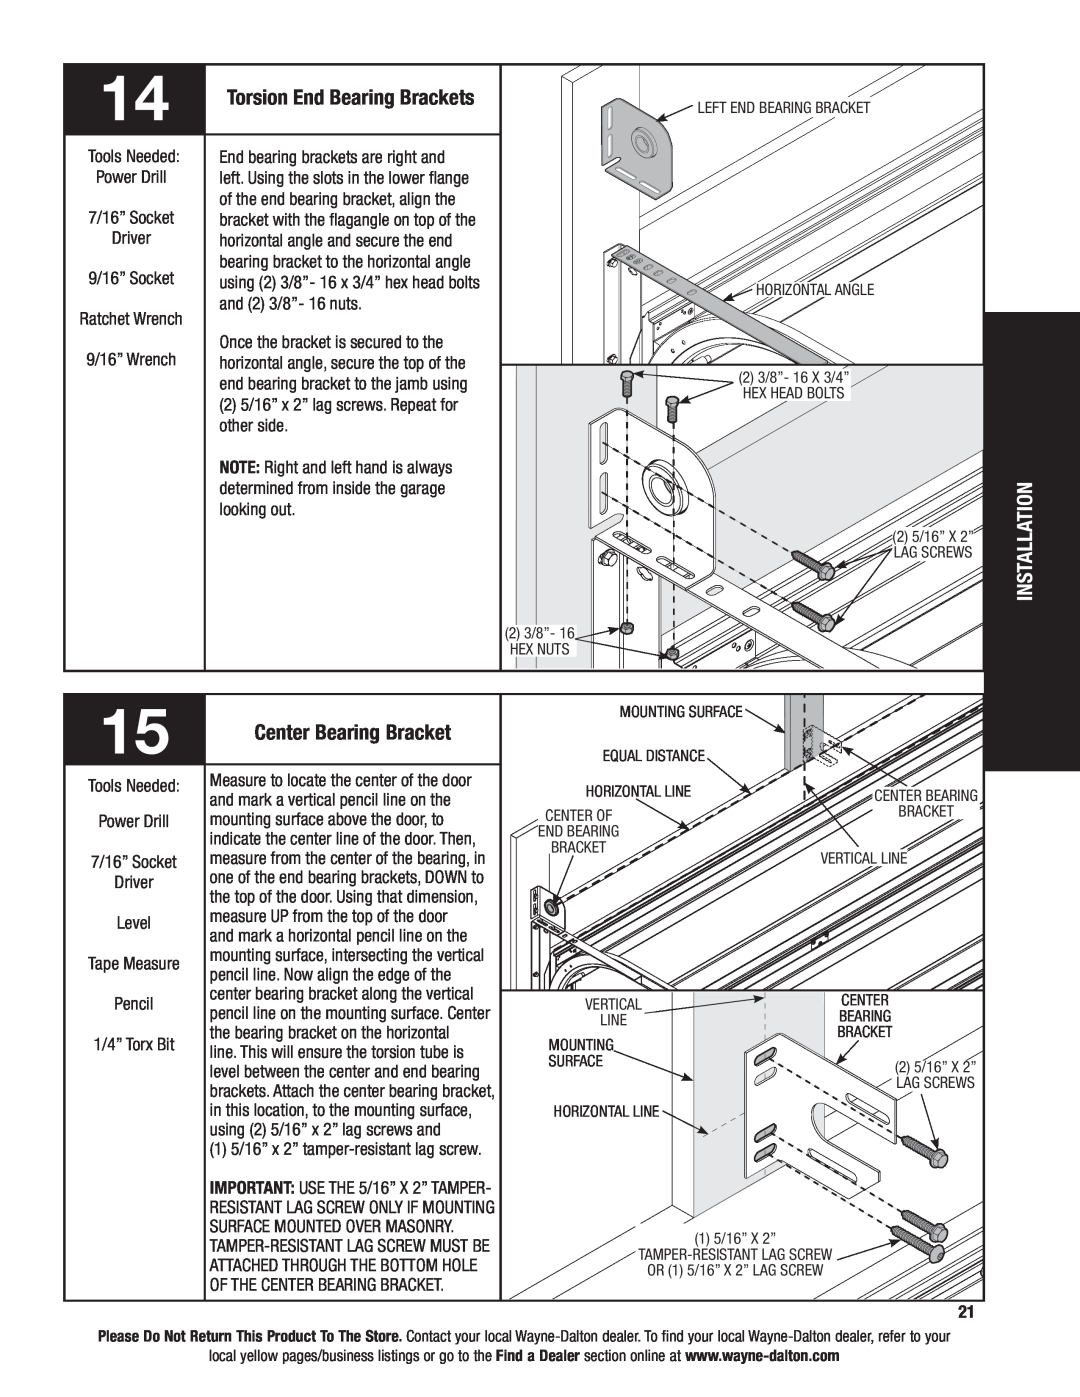 Wayne-Dalton 9400, 9100, 9600 installation instructions Torsion End Bearing Brackets, Center Bearing Bracket 